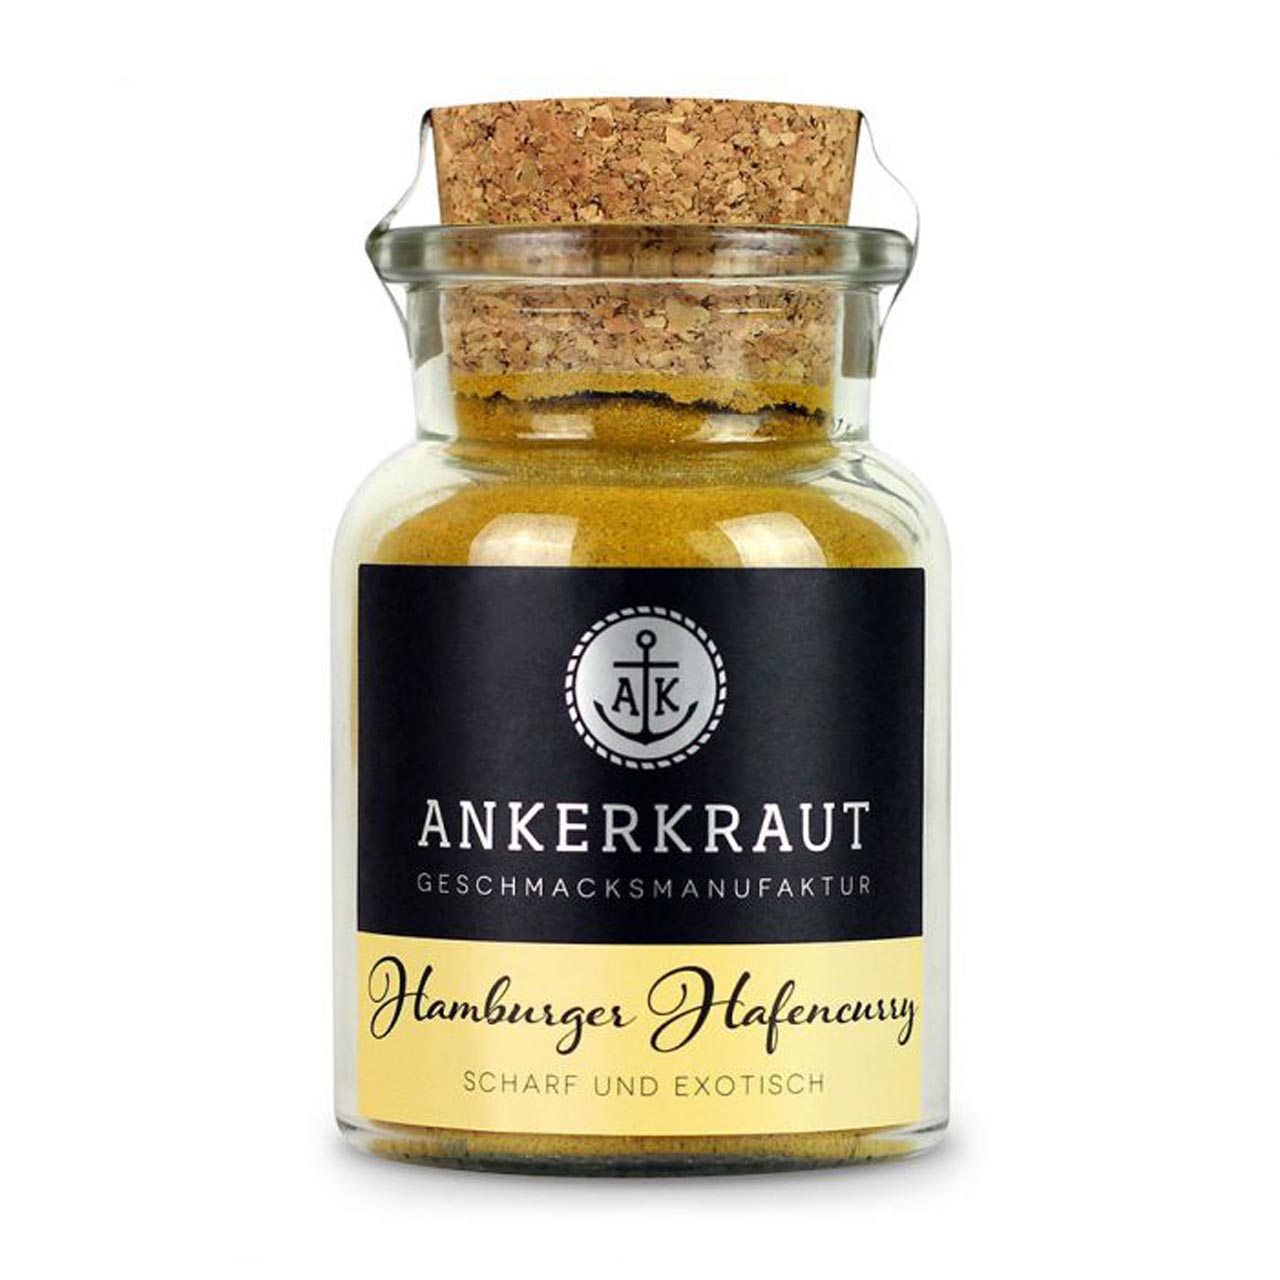 Ankerkraut Hamburger Hafencurry, 60 g Korkenglas